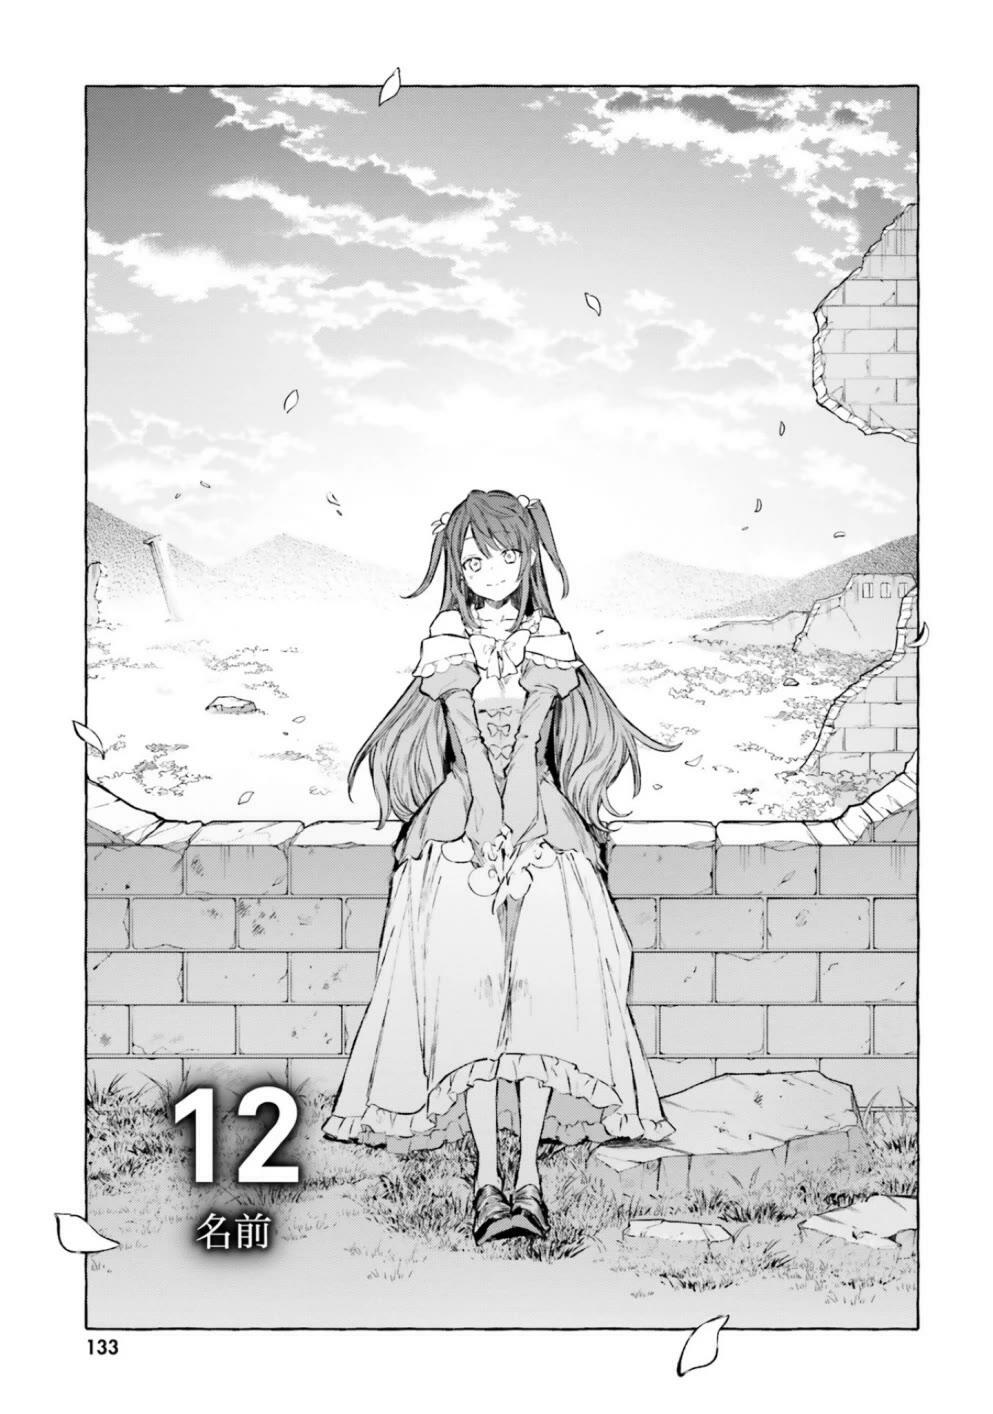 Goblin Slayer, Vol. 12 (manga), Manga